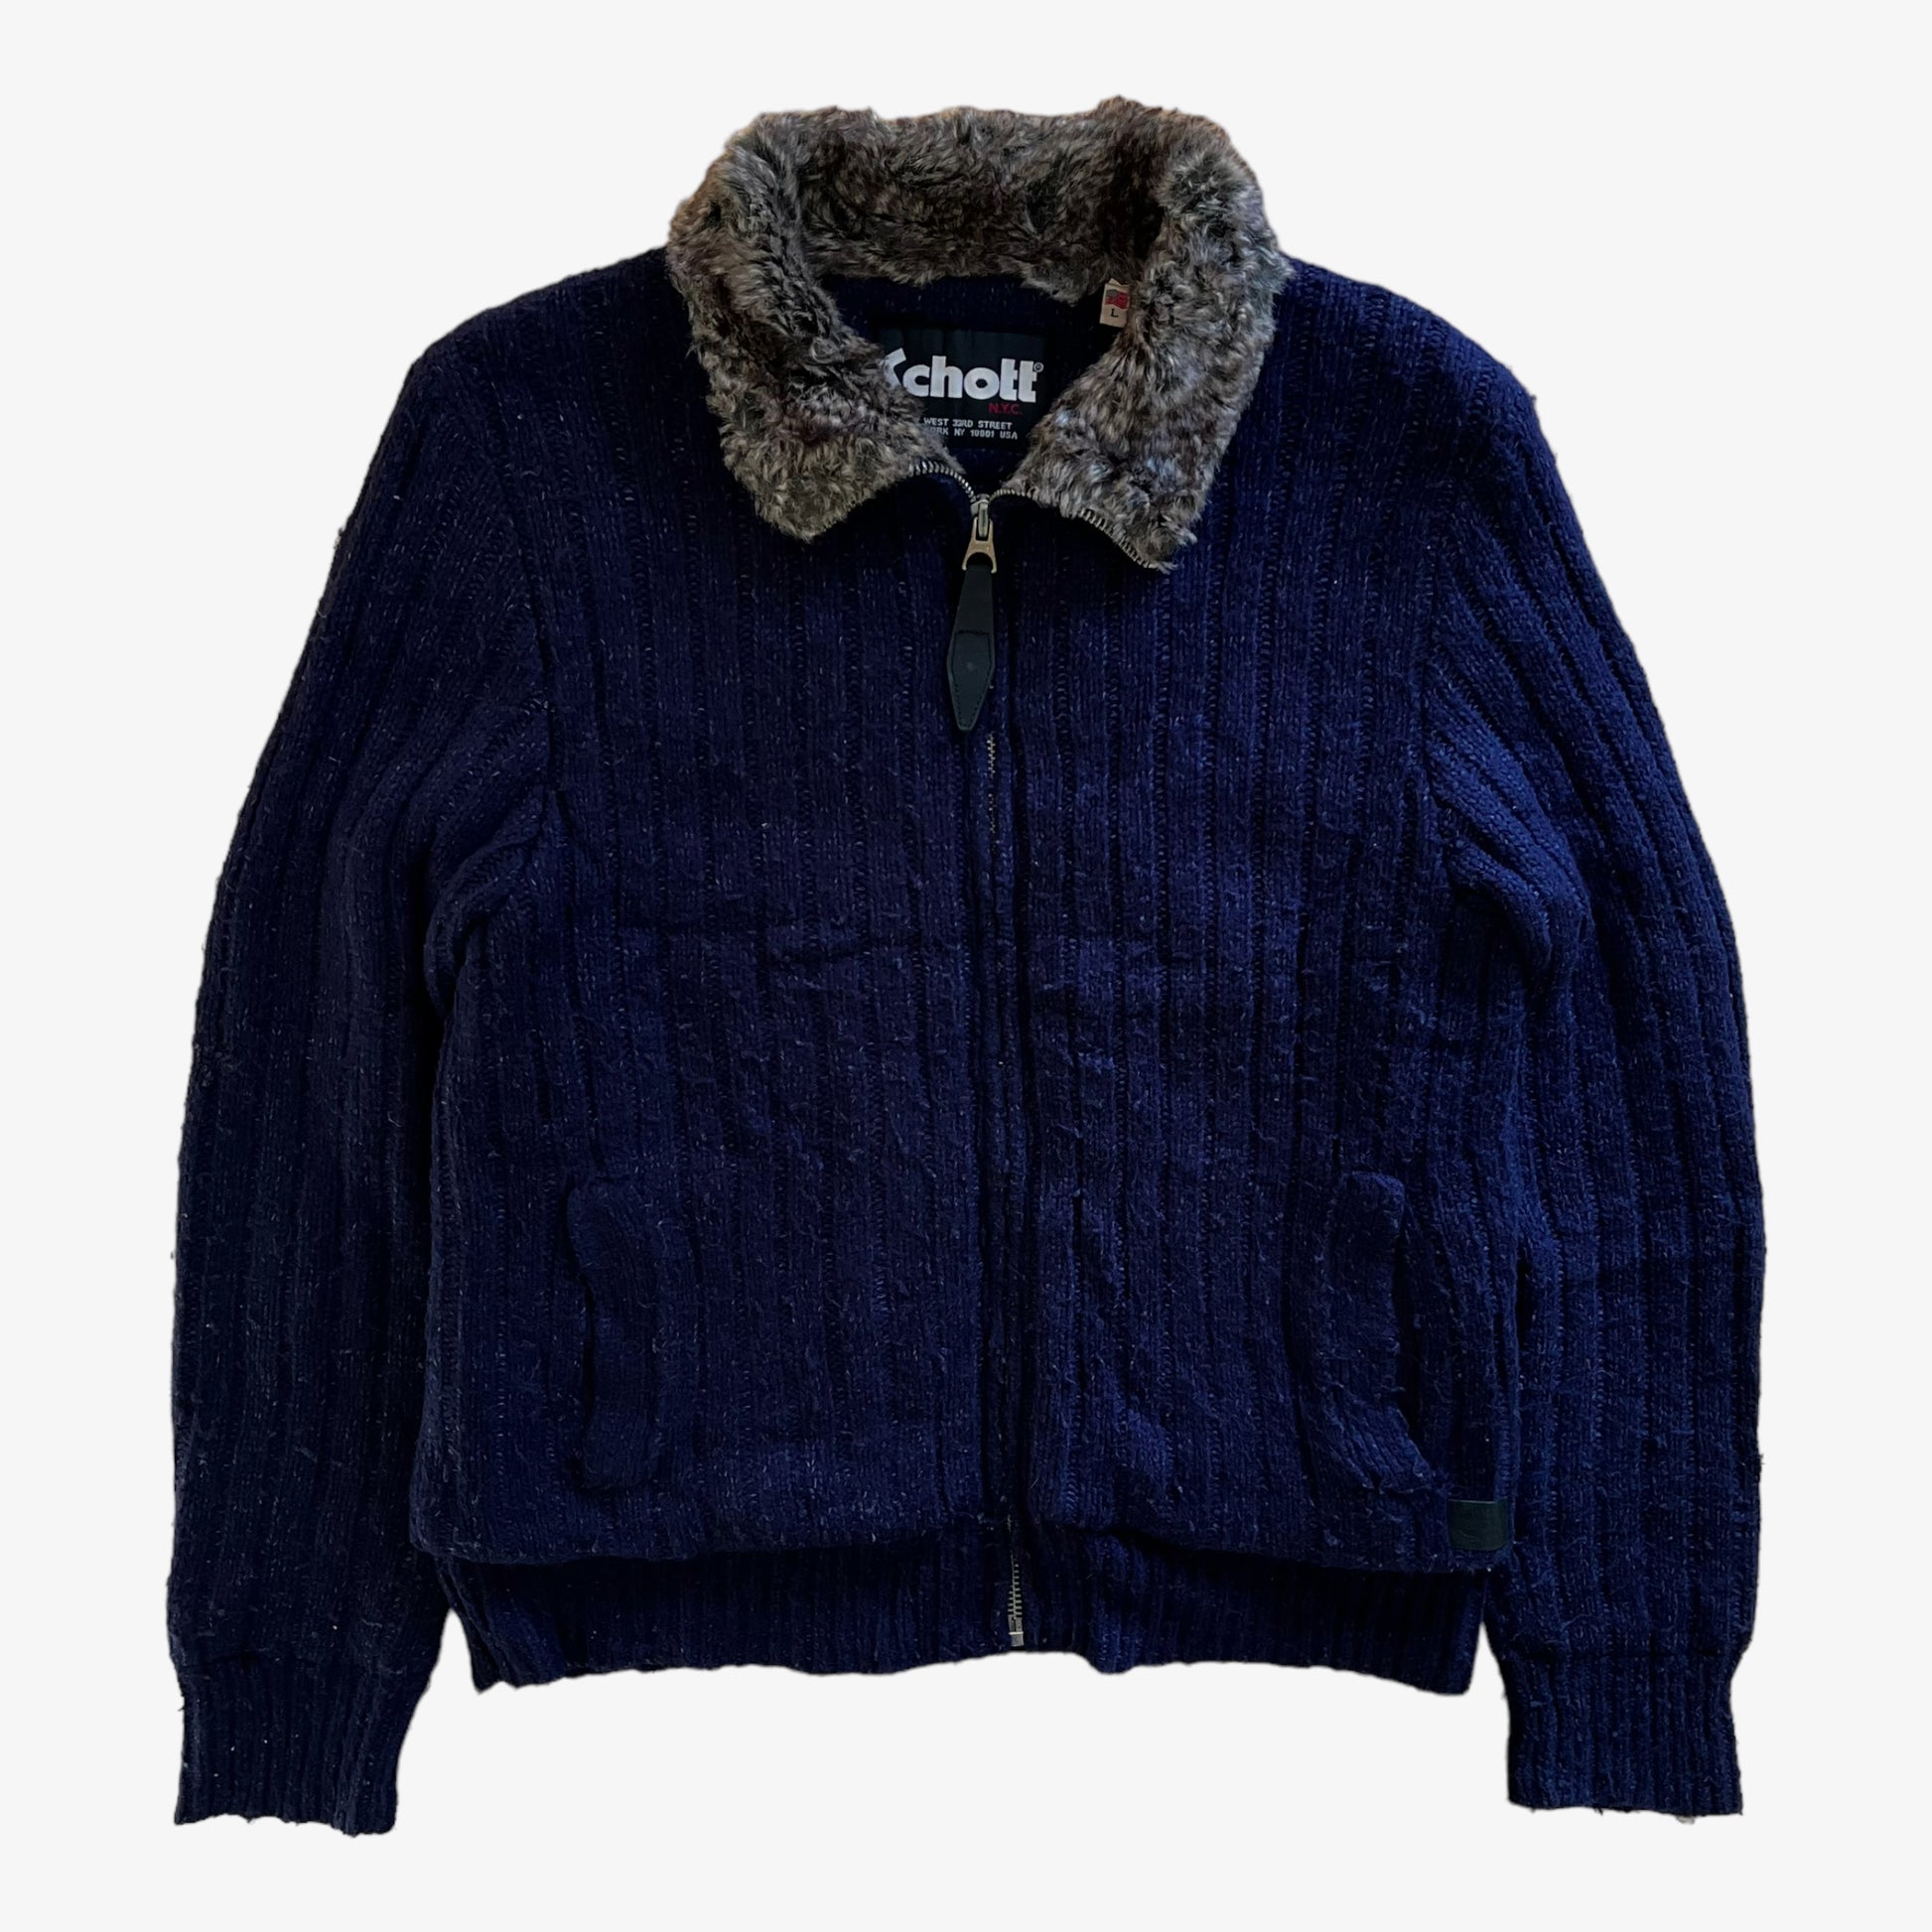 Vintage 90s Schott Navy Wool Ribbed Jacket With Fur Collar - Casspios Dream